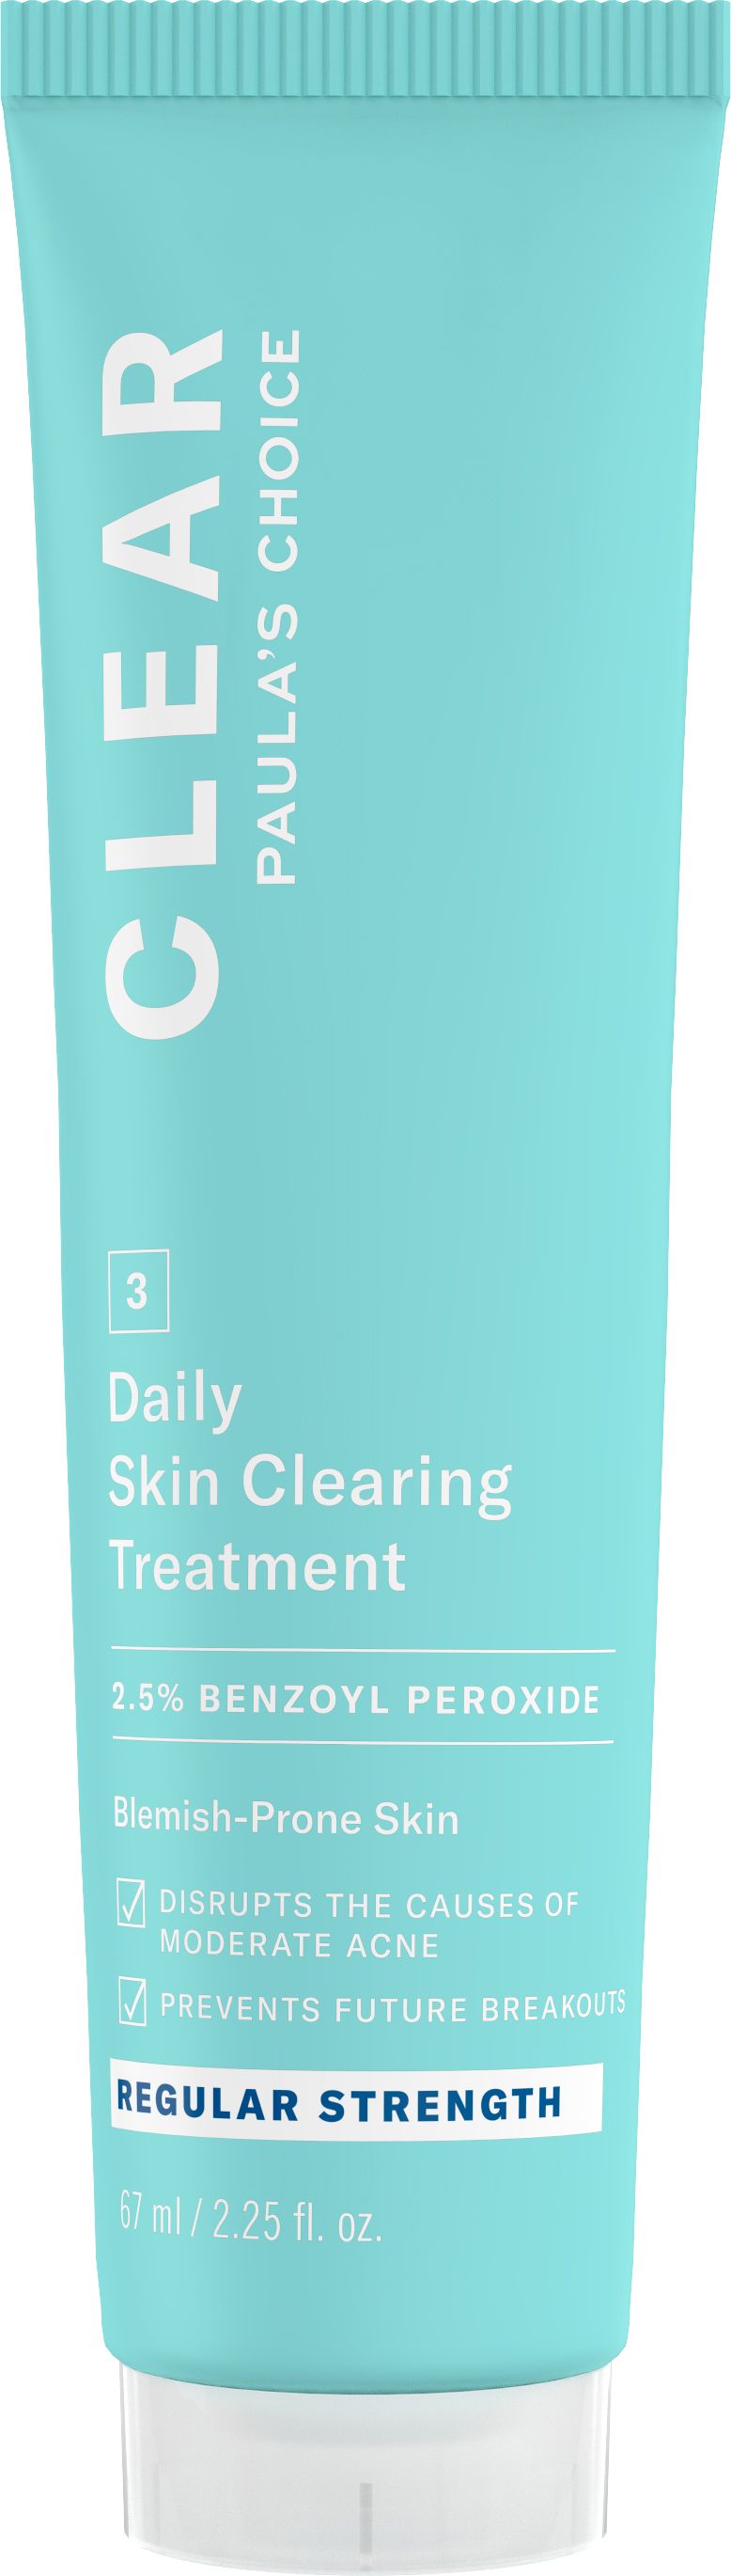 Paula's Choice CLEAR Regular Strength Daily Skin Clearing Treatment with 2.5% Benzoyl Peroxide | Paula's Choice (AU, CA & US)